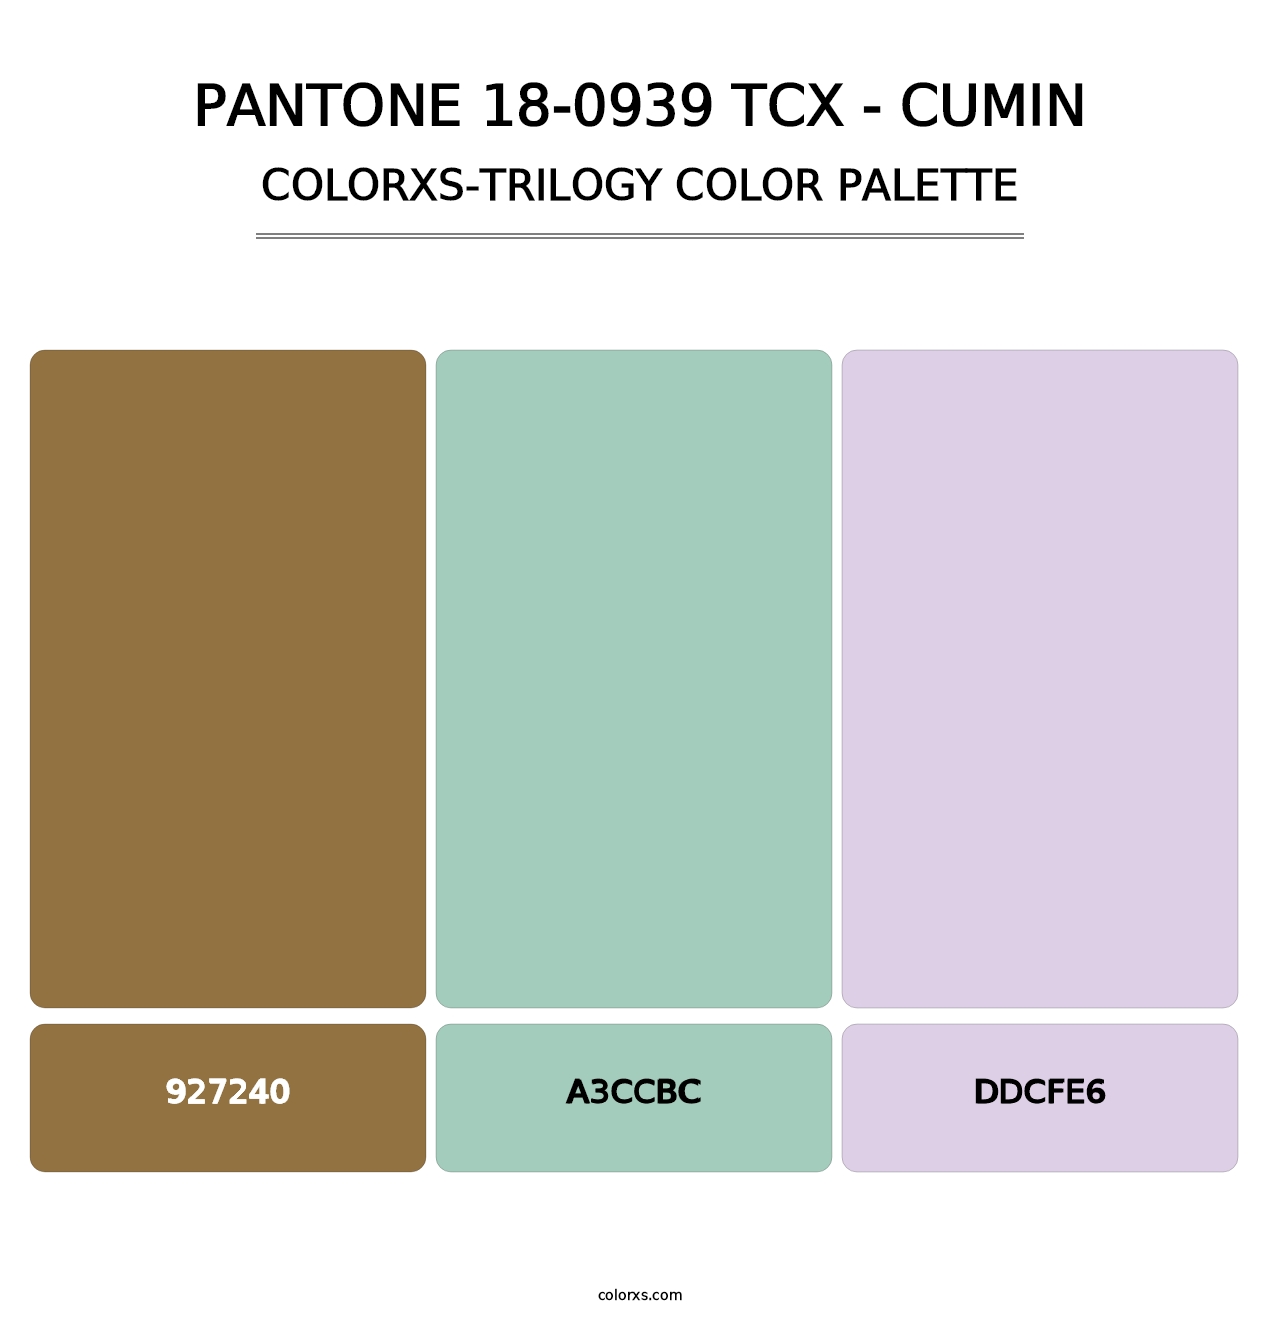 PANTONE 18-0939 TCX - Cumin - Colorxs Trilogy Palette